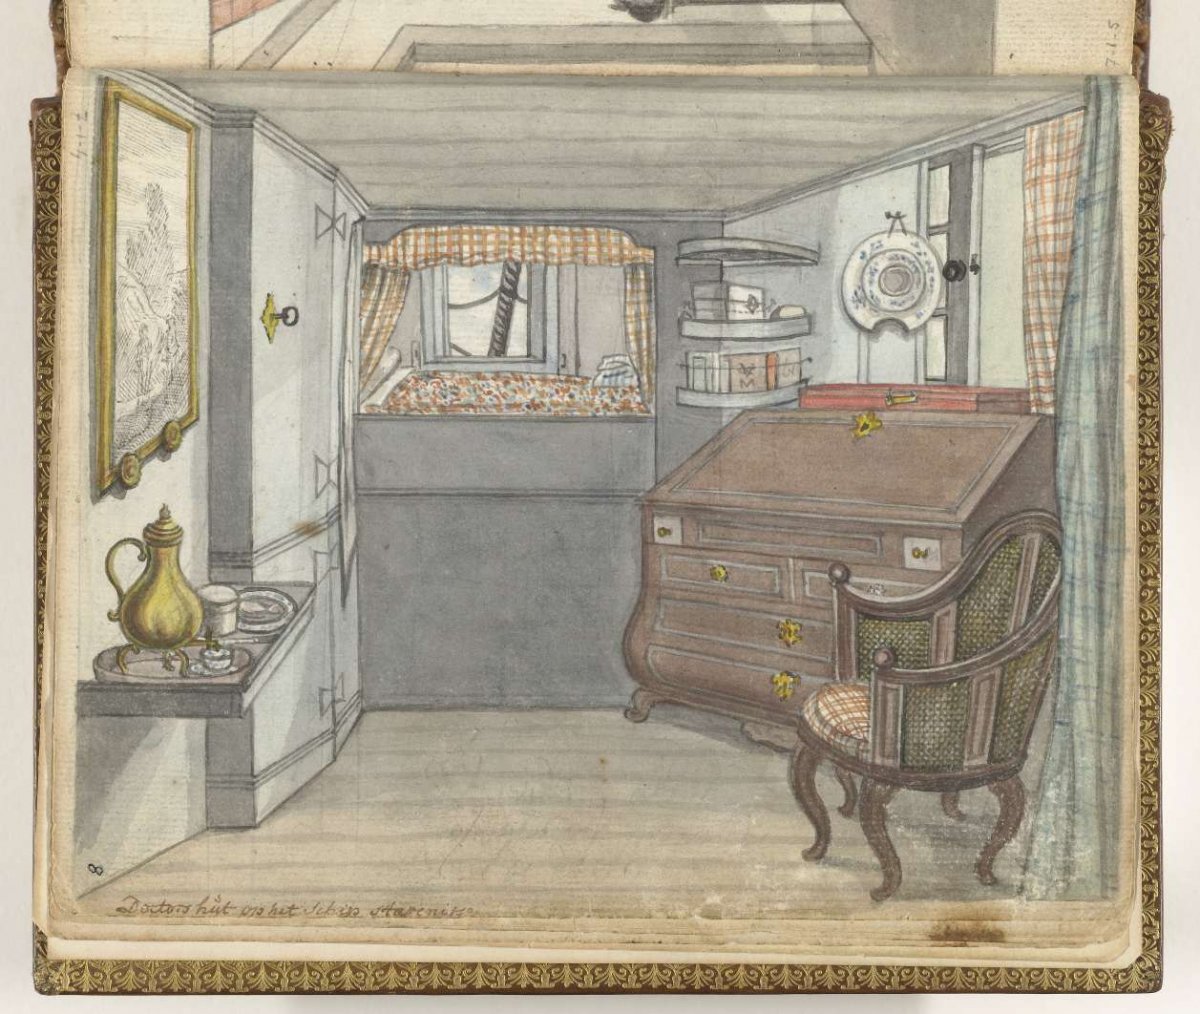 Surgeon's hut on the VOC ship the Stavenisse, Jan Brandes, 1785 - 1786